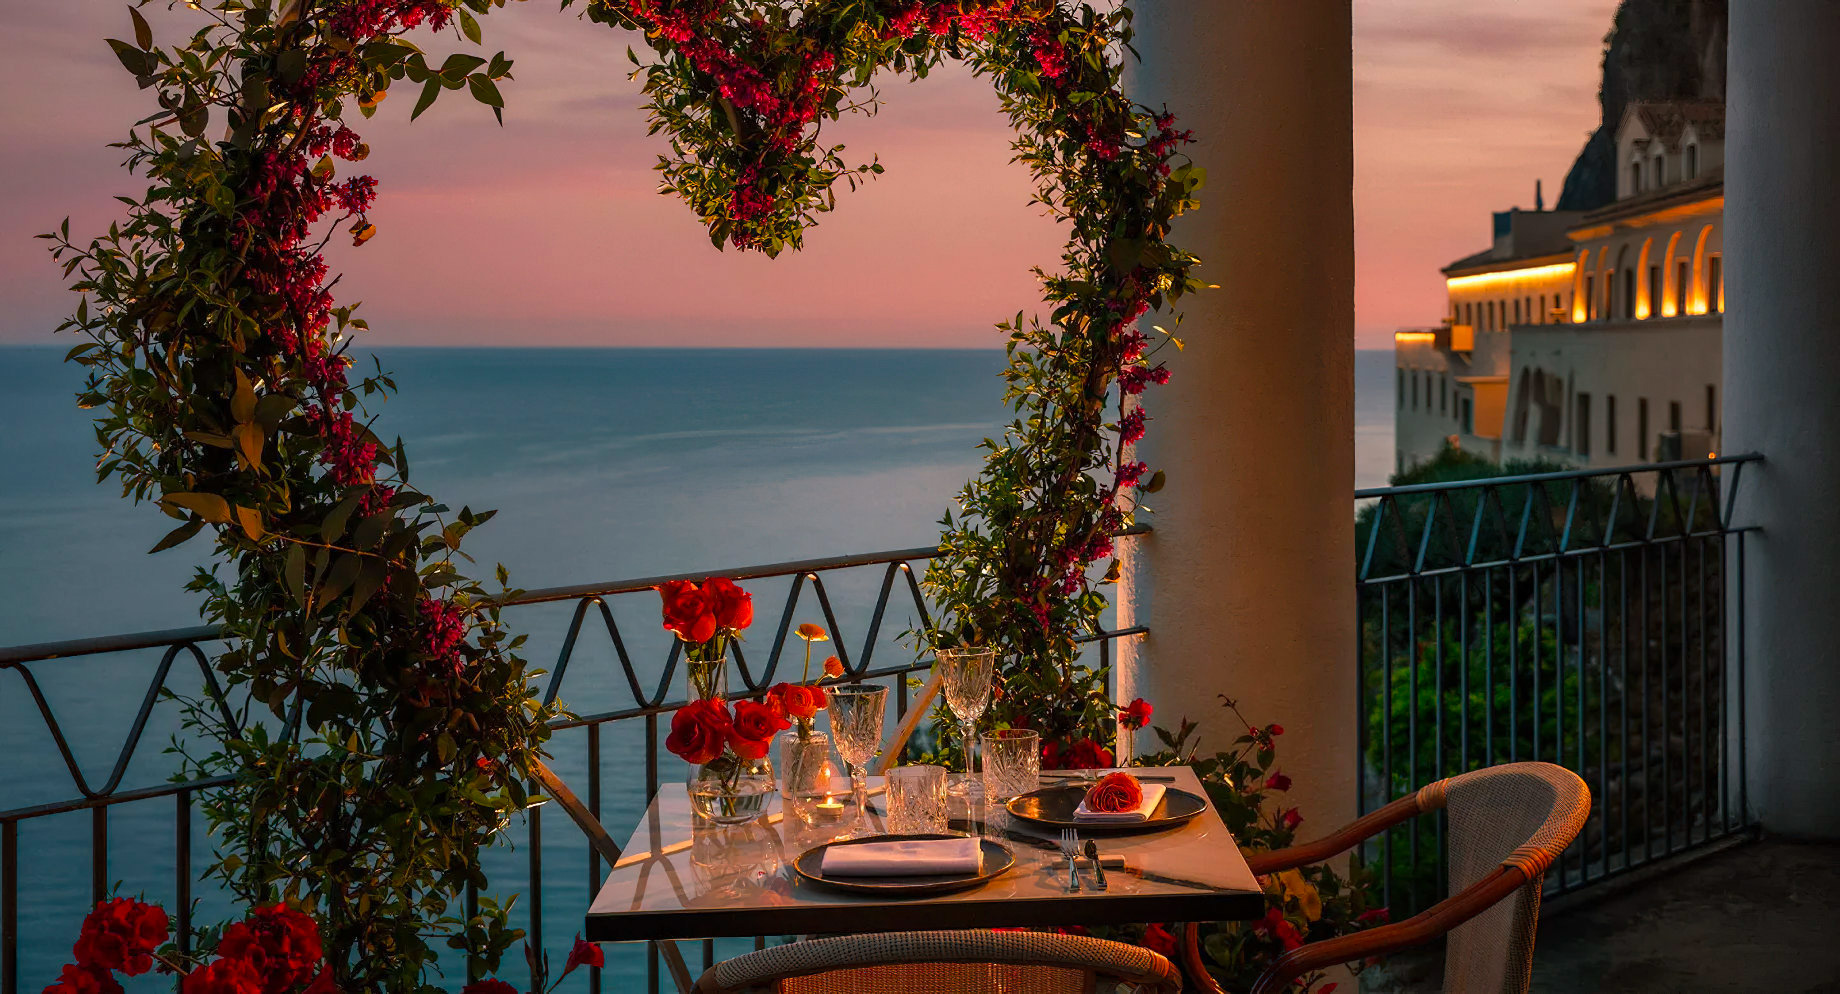 Anantara Convento Di Amalfi Grand Hotel - Italy - Sunset Ocean View Dining